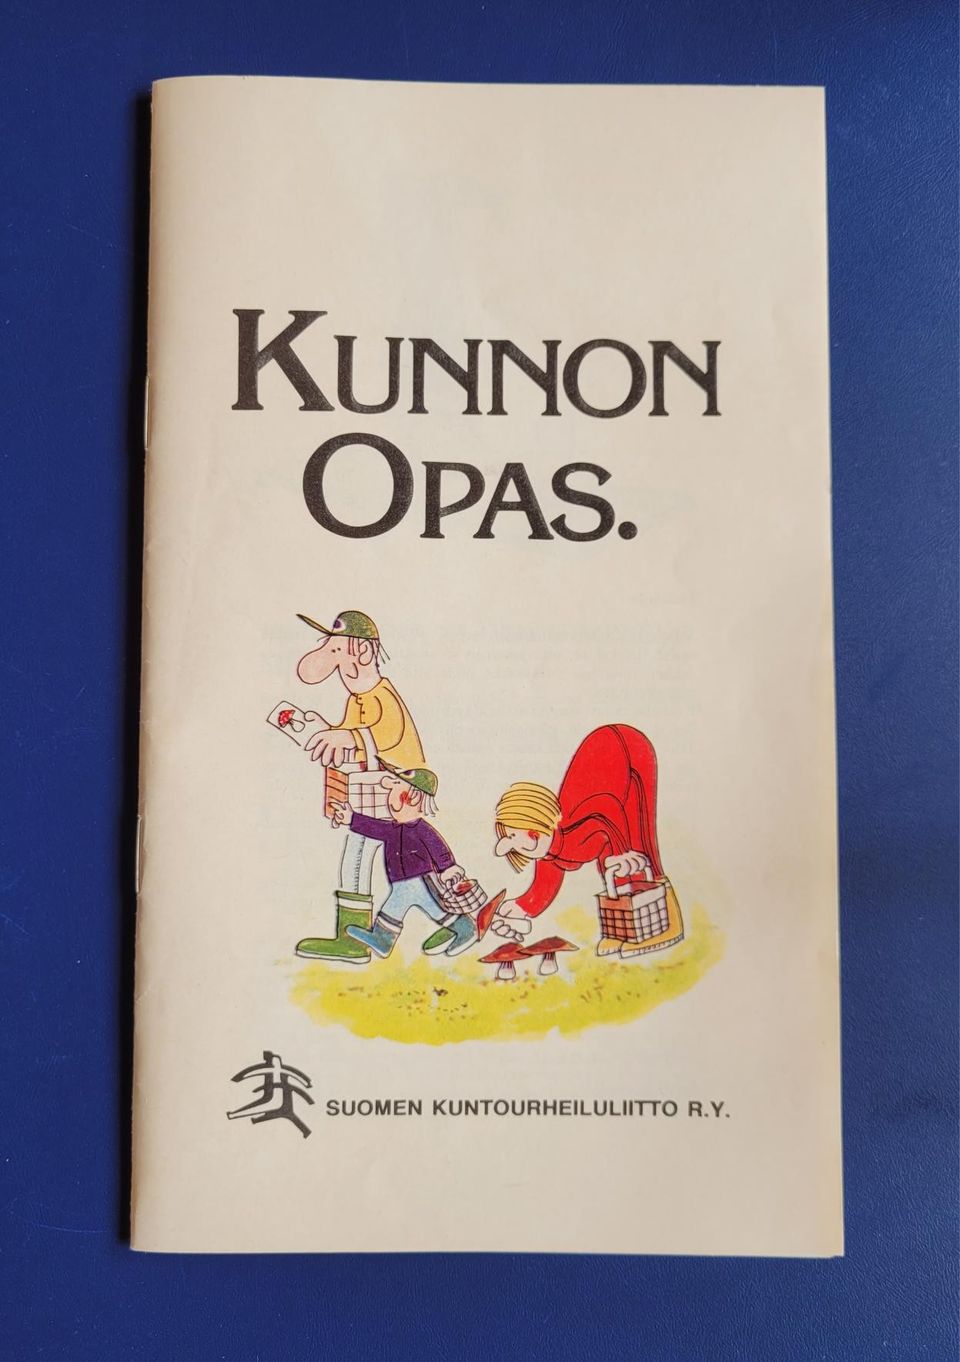 Kunnon opas - Suomen kuntourheiluliitto r.y. (1980)